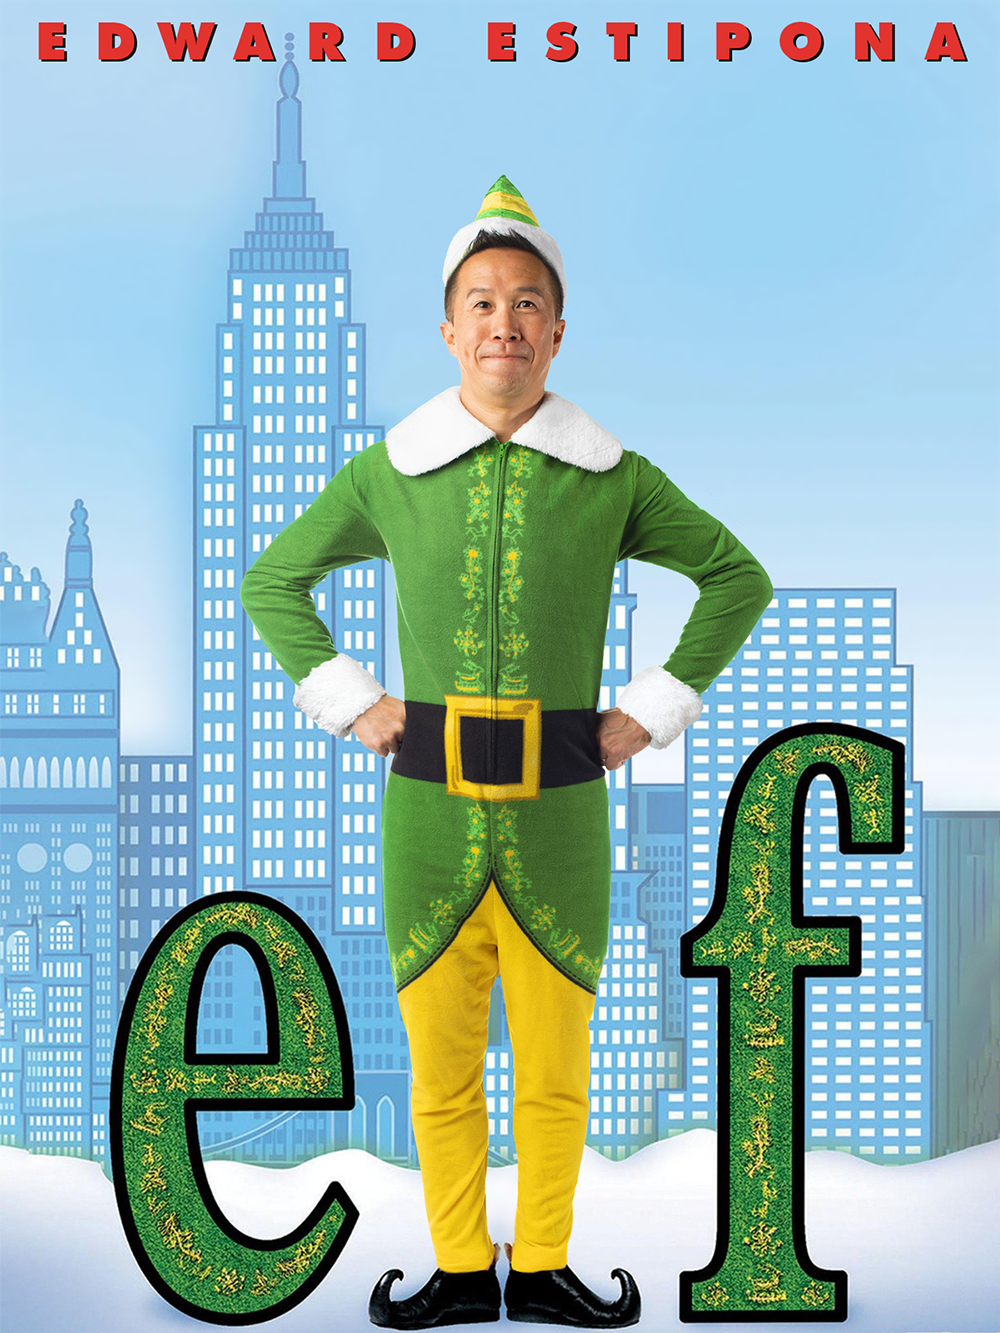 Estipona Group Christmas Card - Edward as Elf